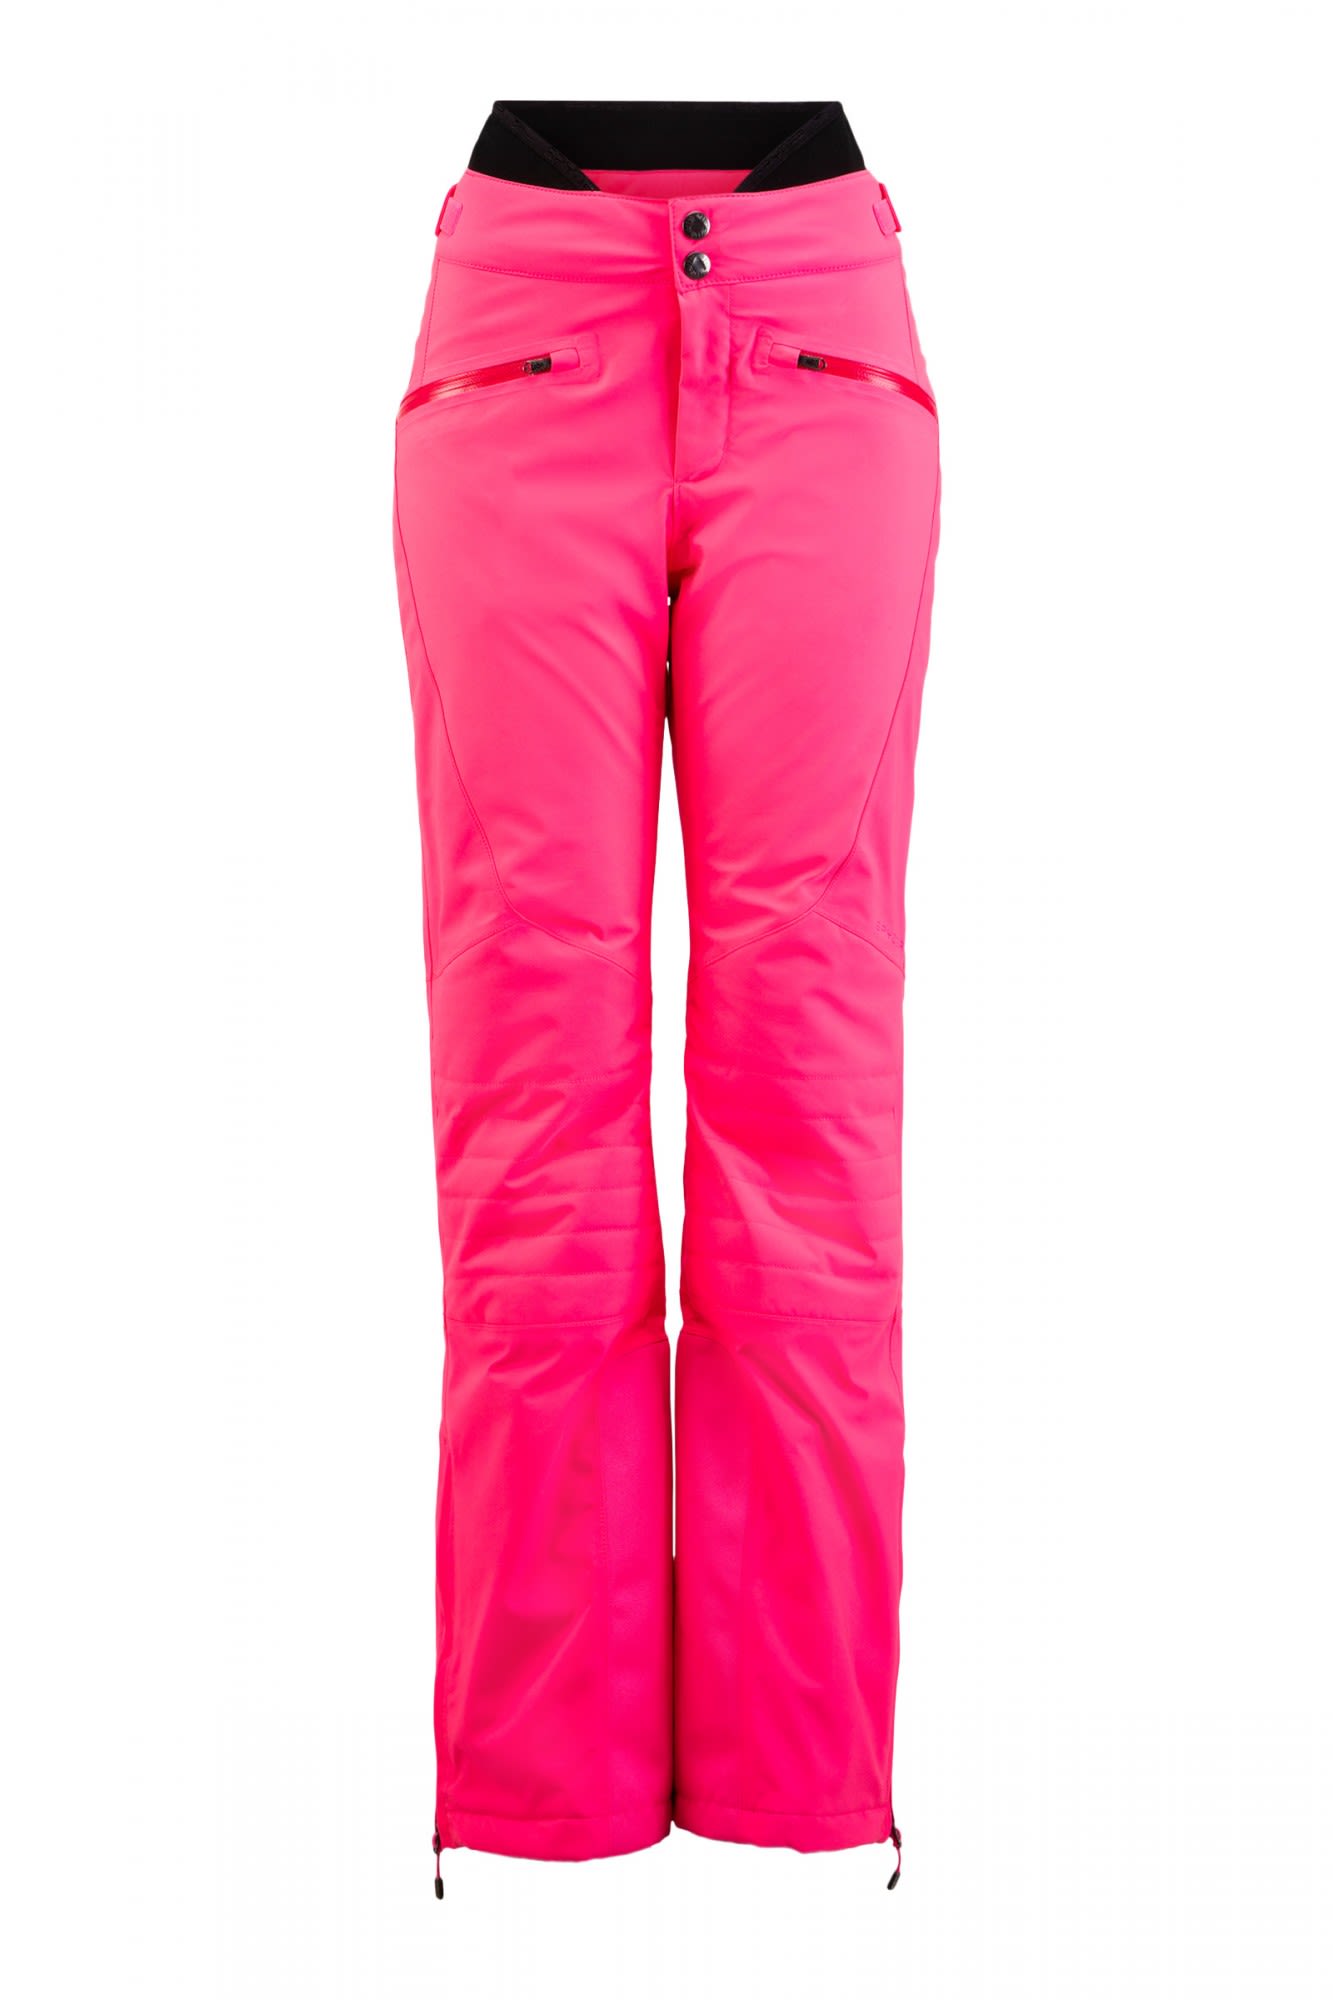 Spyder Echo Gtx(R)(R) Pant Pink- Female Gore-Tex(R) Softshellhosen- Grsse 6 - 34 - Farbe Bryte Bubblegum unter Spyder